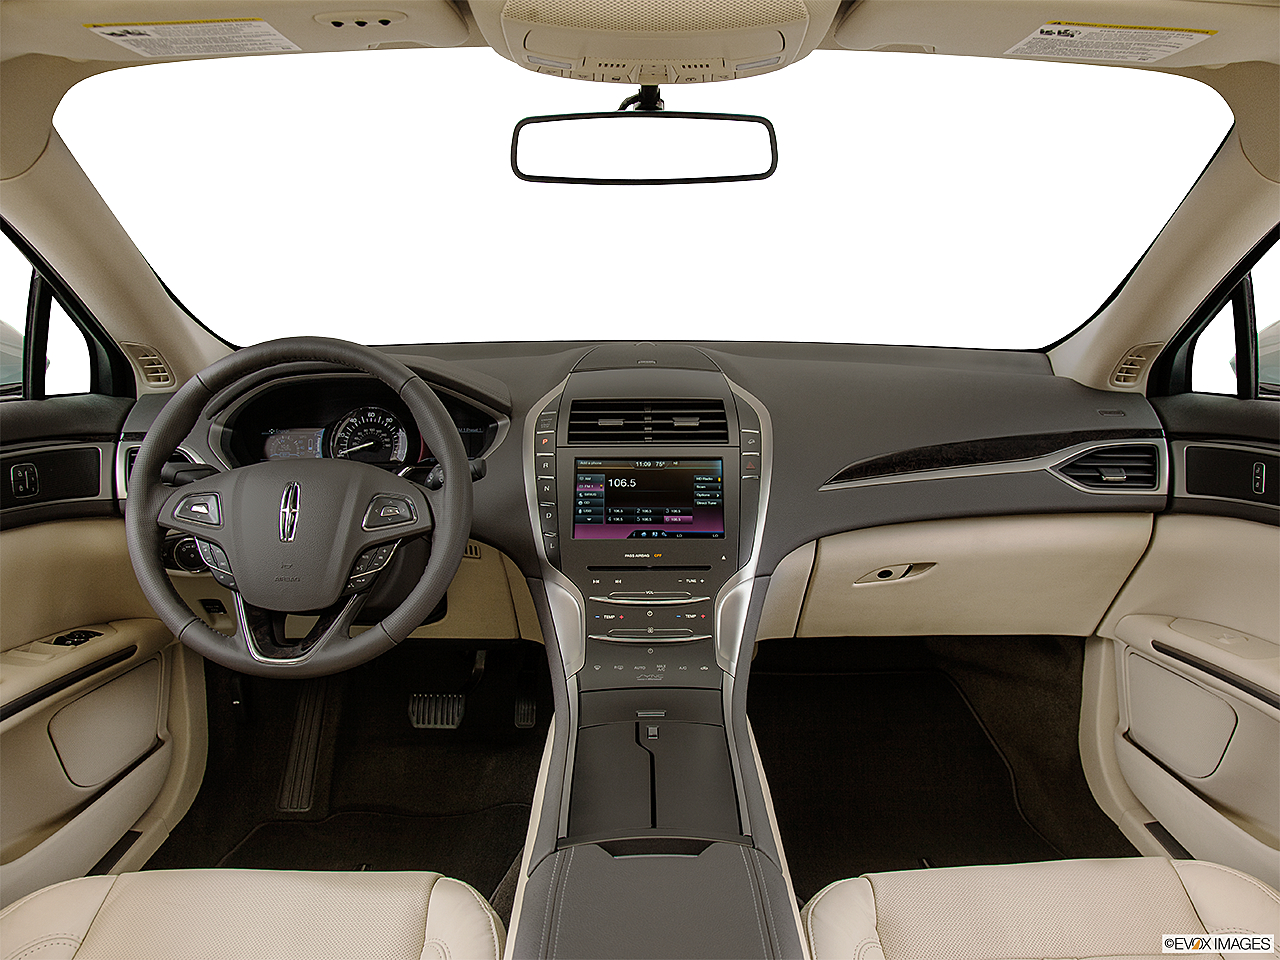 2014 Lincoln MKZ Hybrid 4dr Sedan - Research - GrooveCar